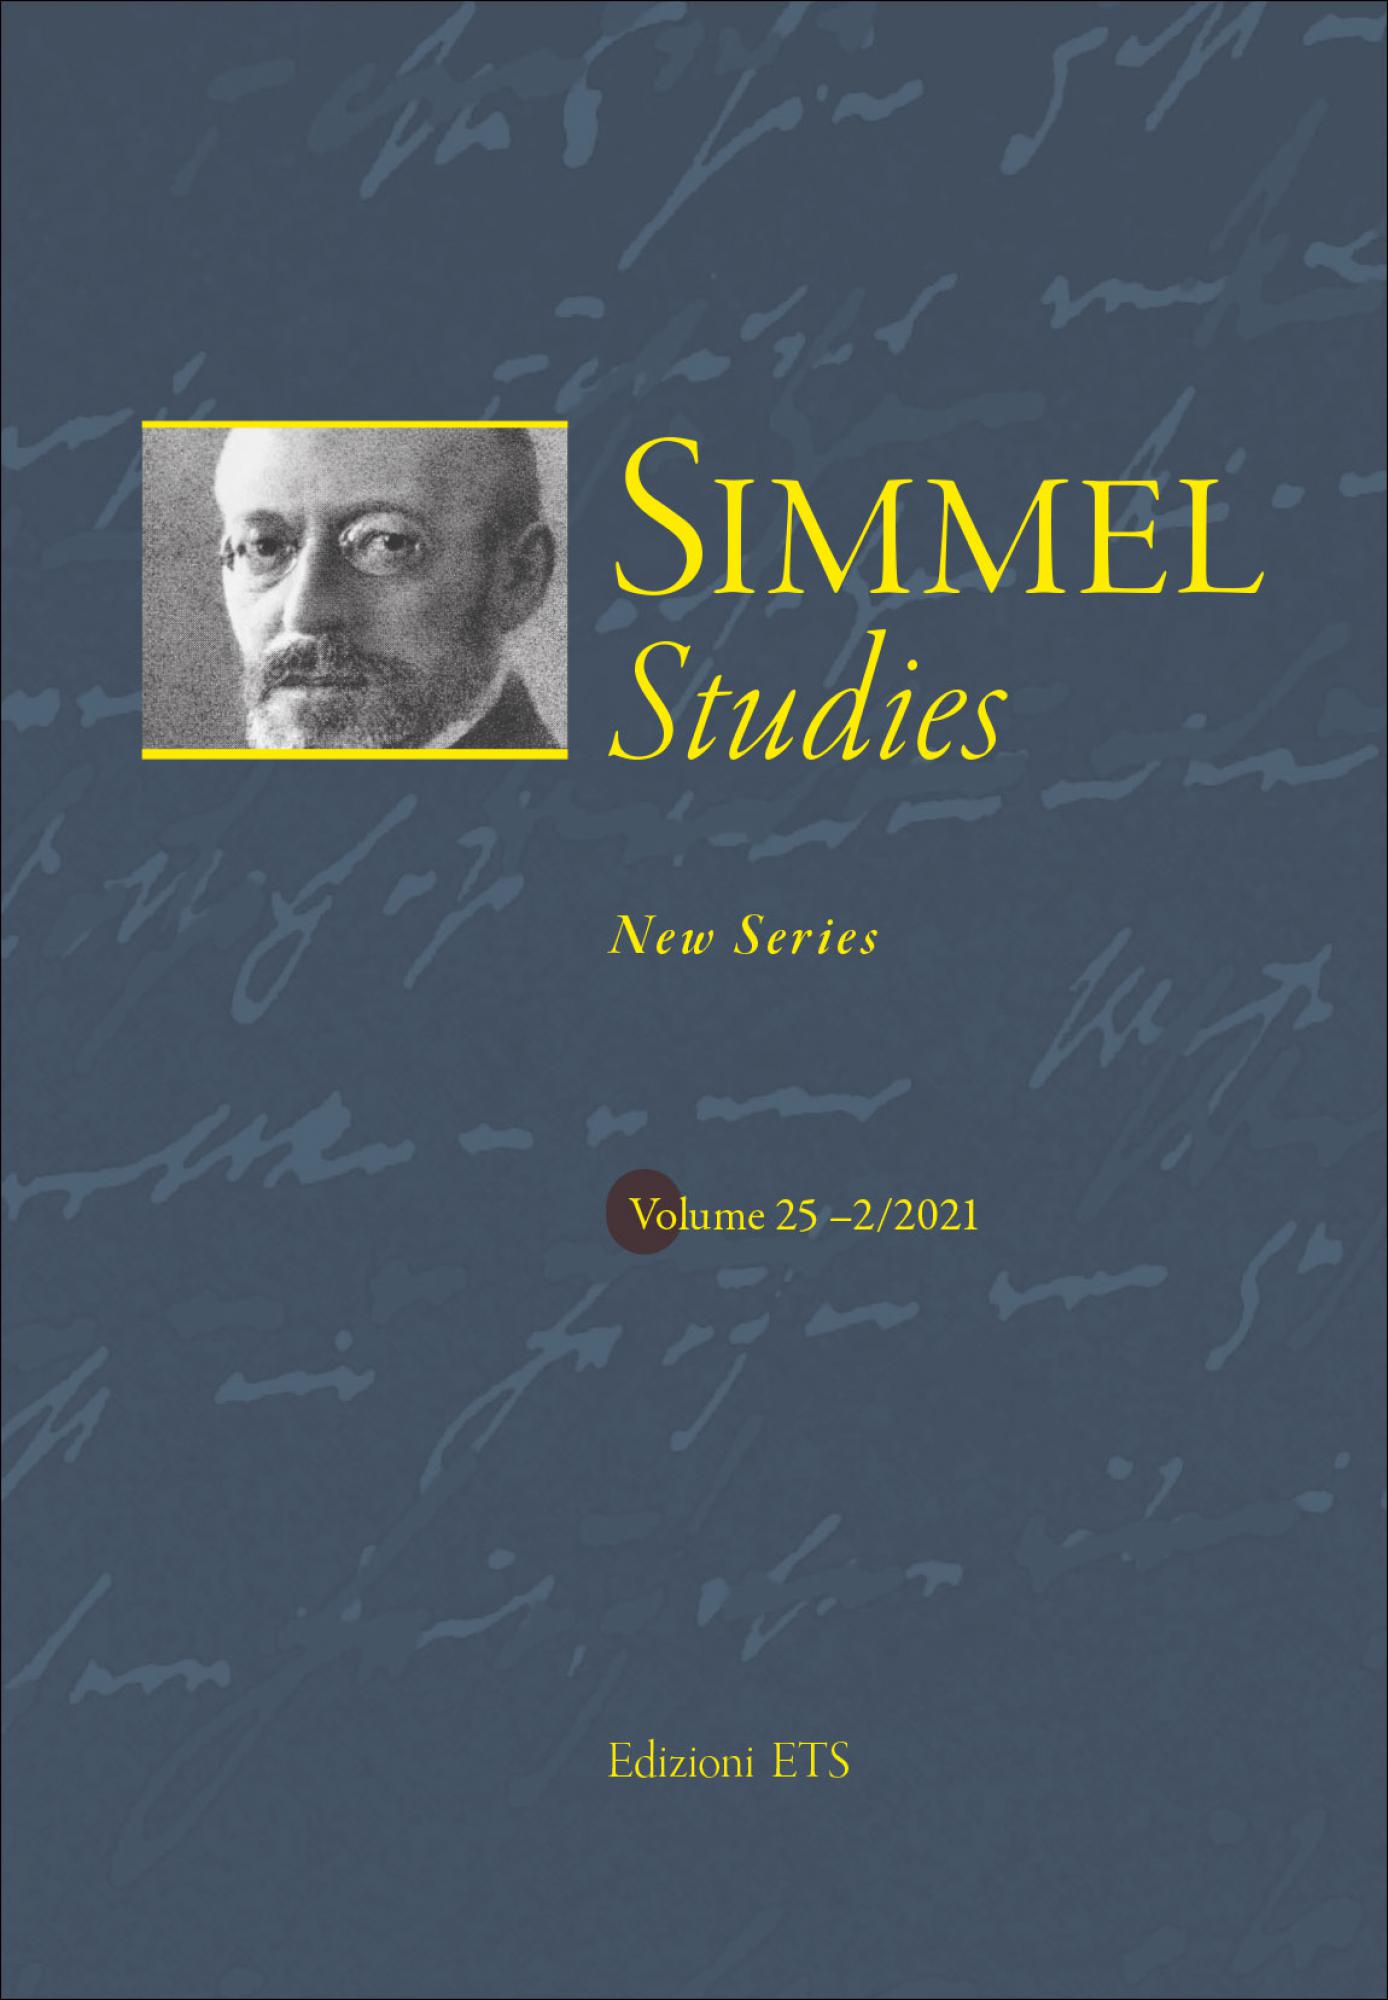 Simmel Studies 25-2/2021